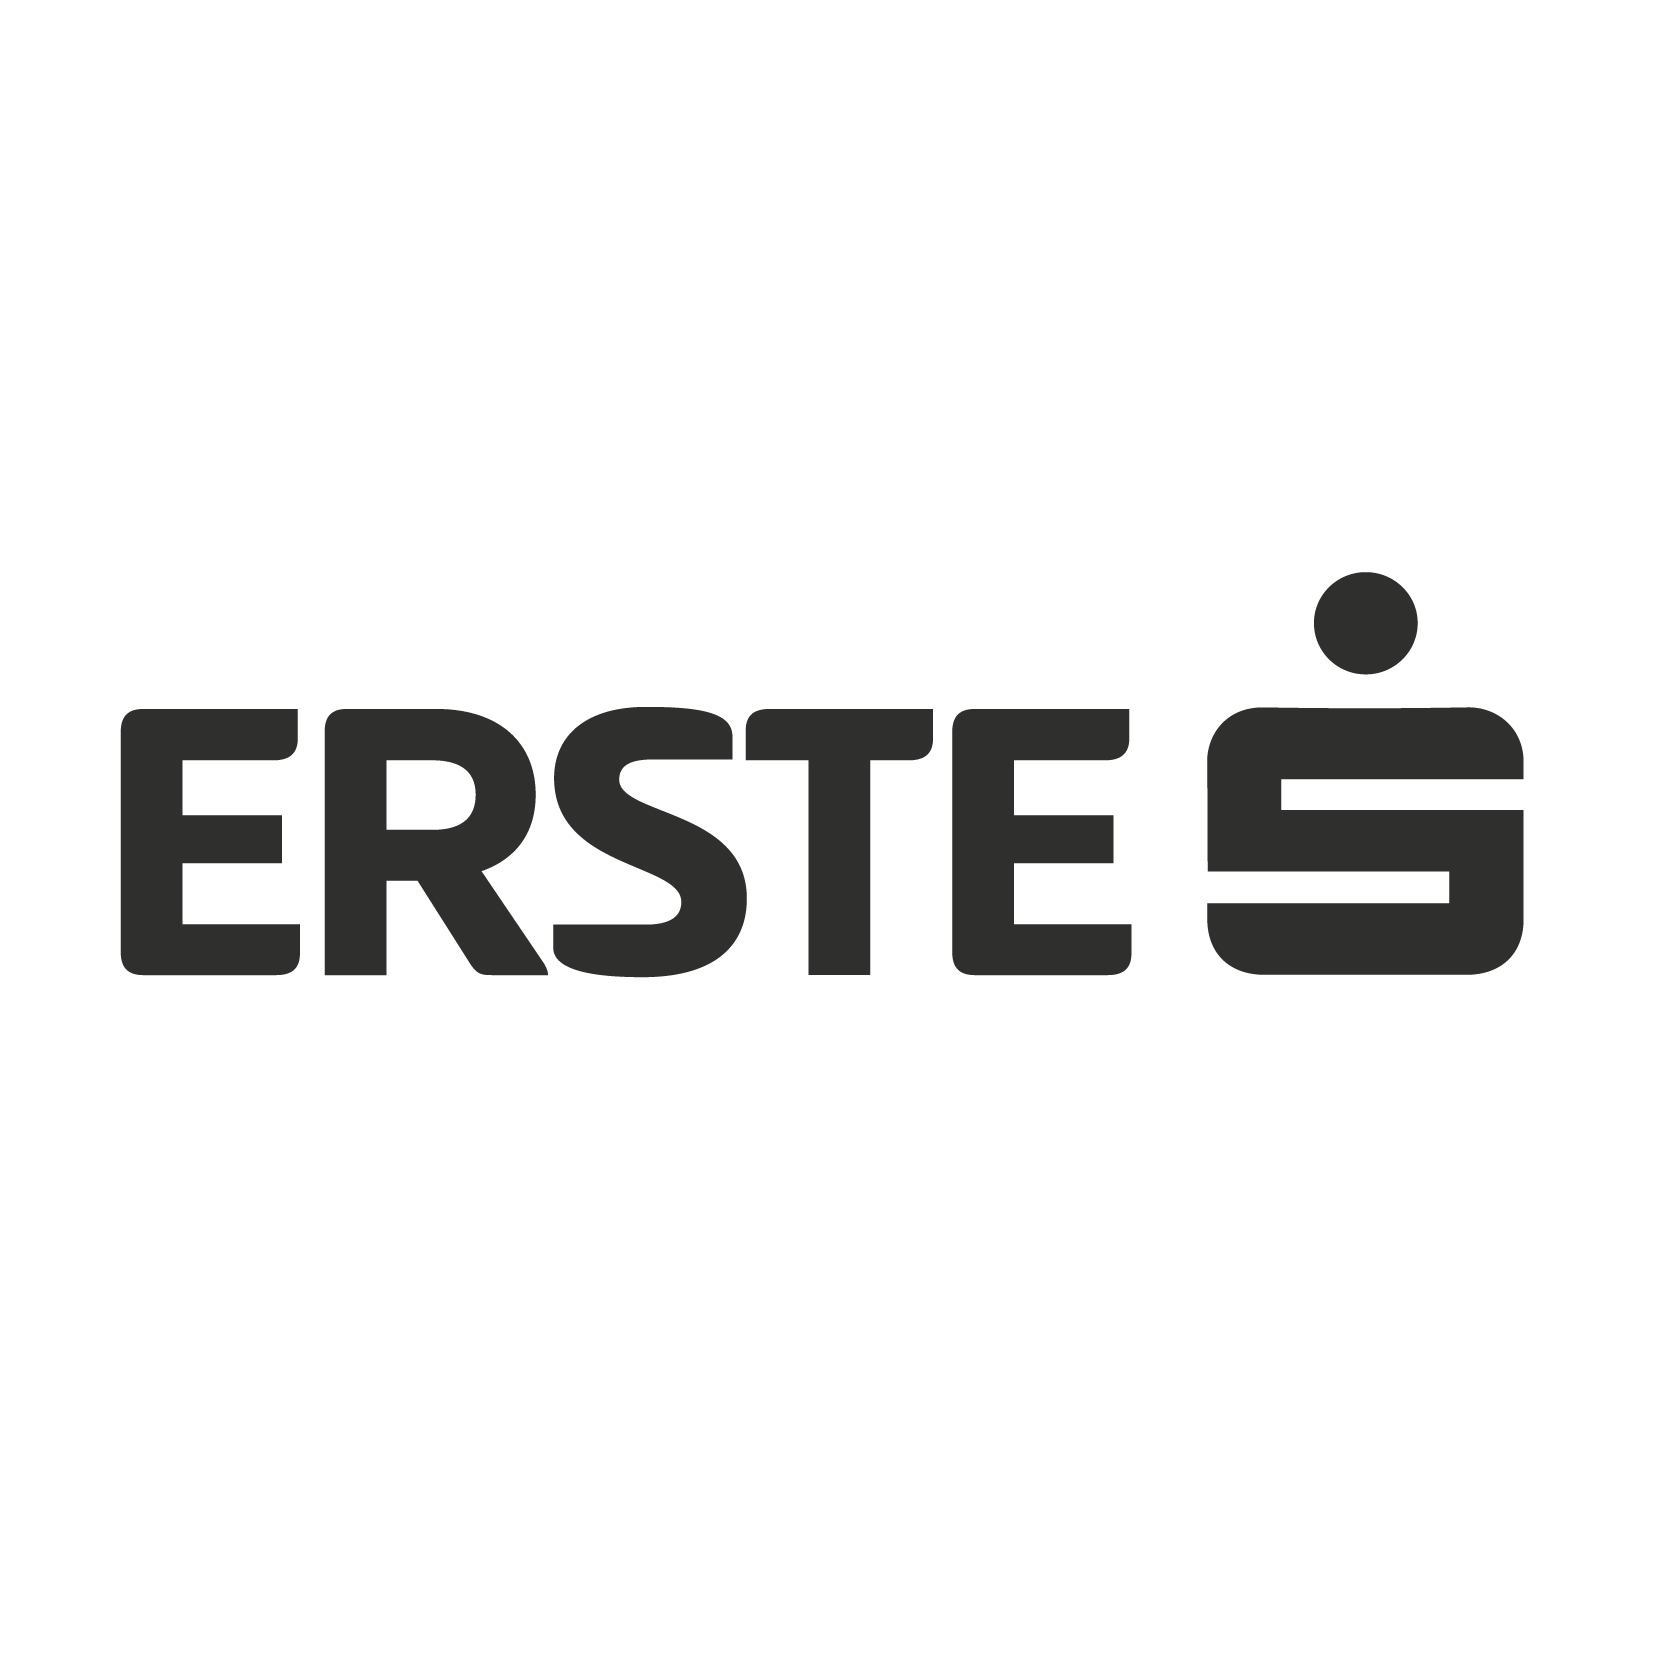 Erste Bank_ Logo_web